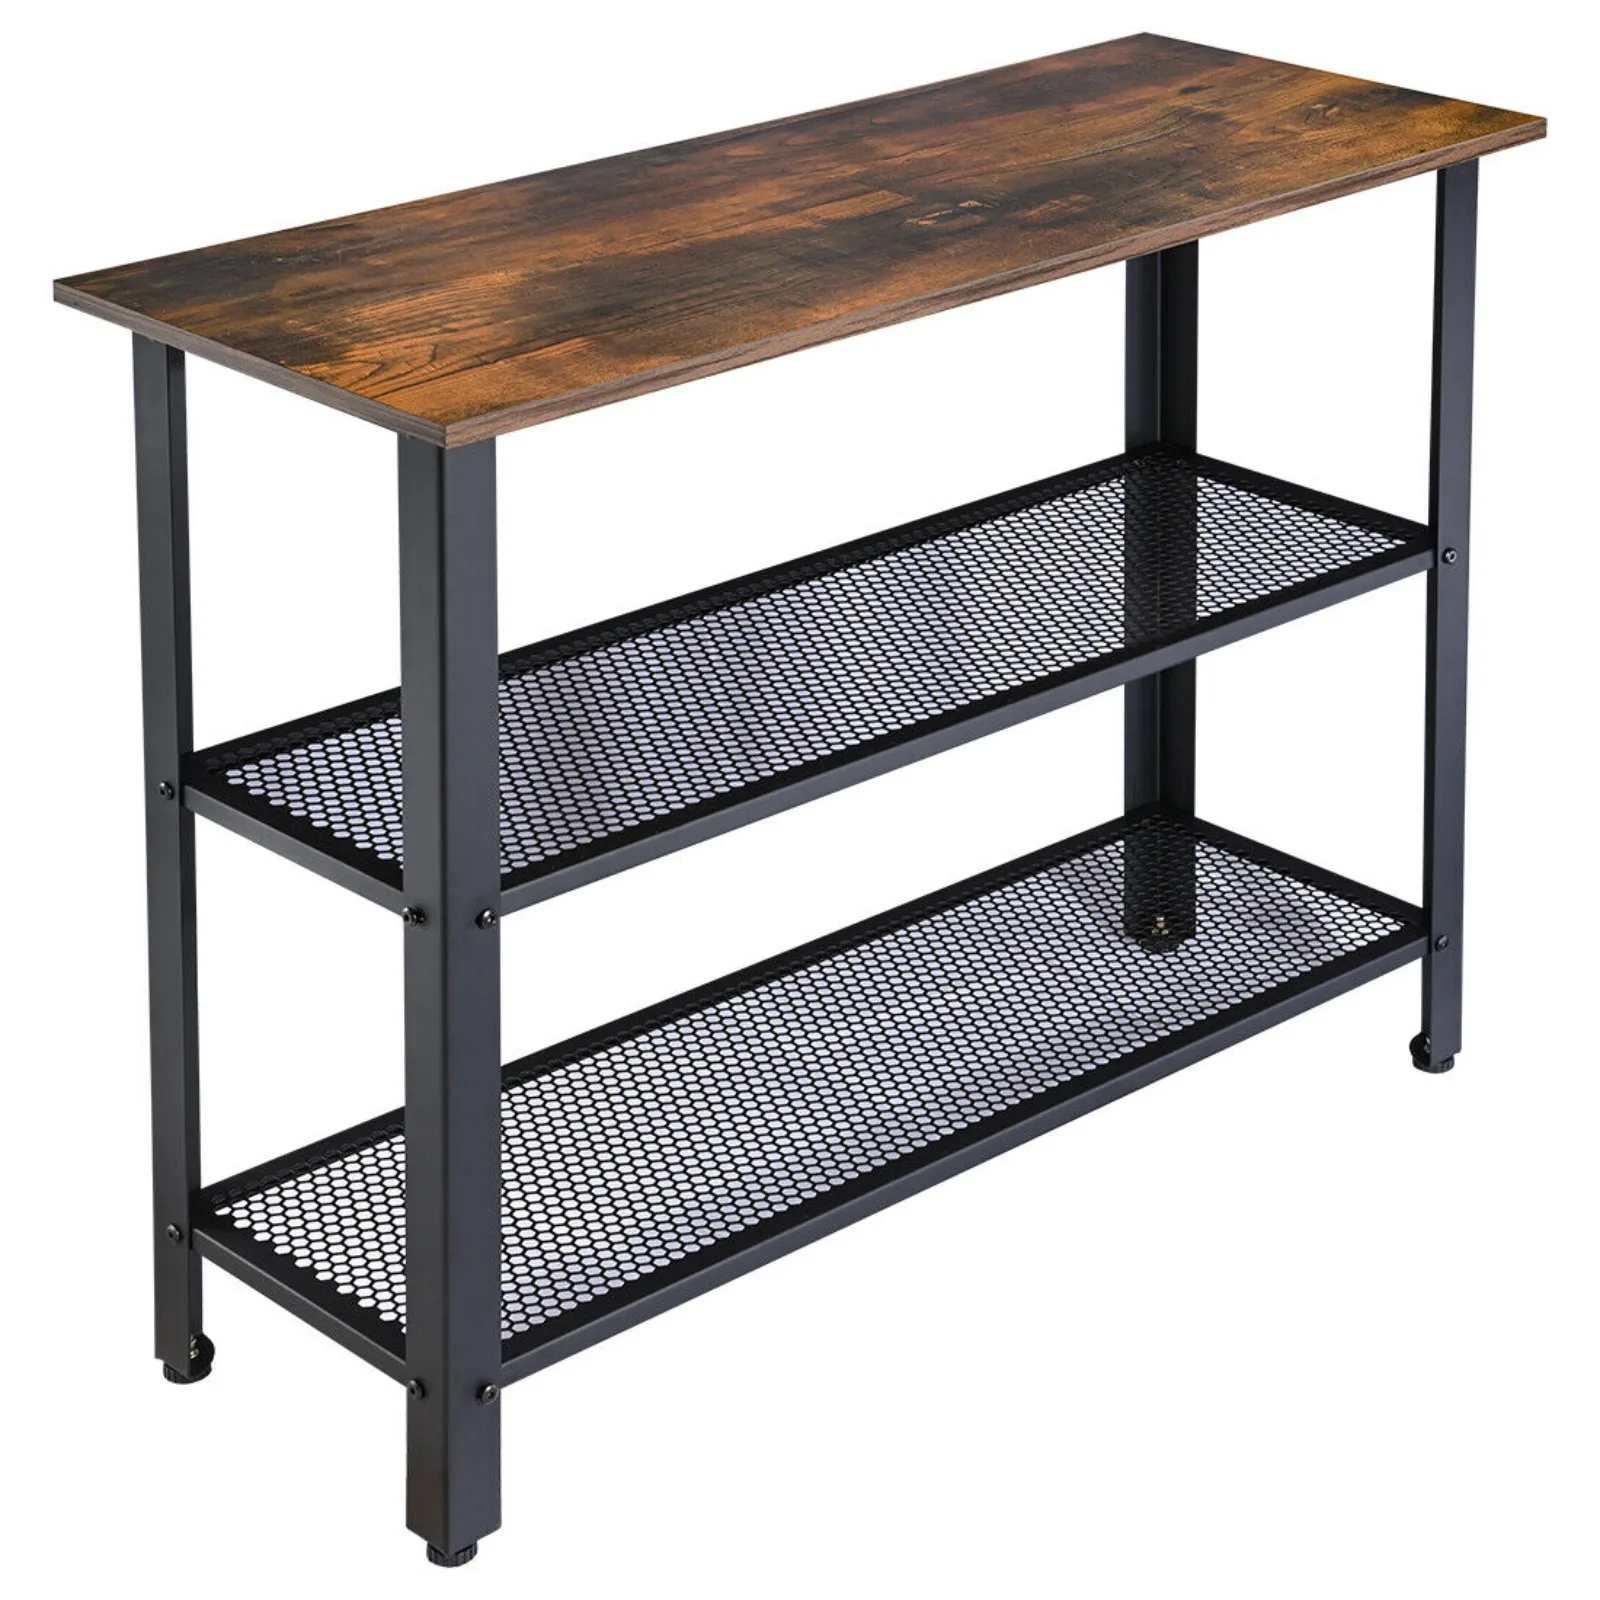 

3-Tier Rustic Console Table Industrial Metal Hallway Furniture w/ Storage Shelf